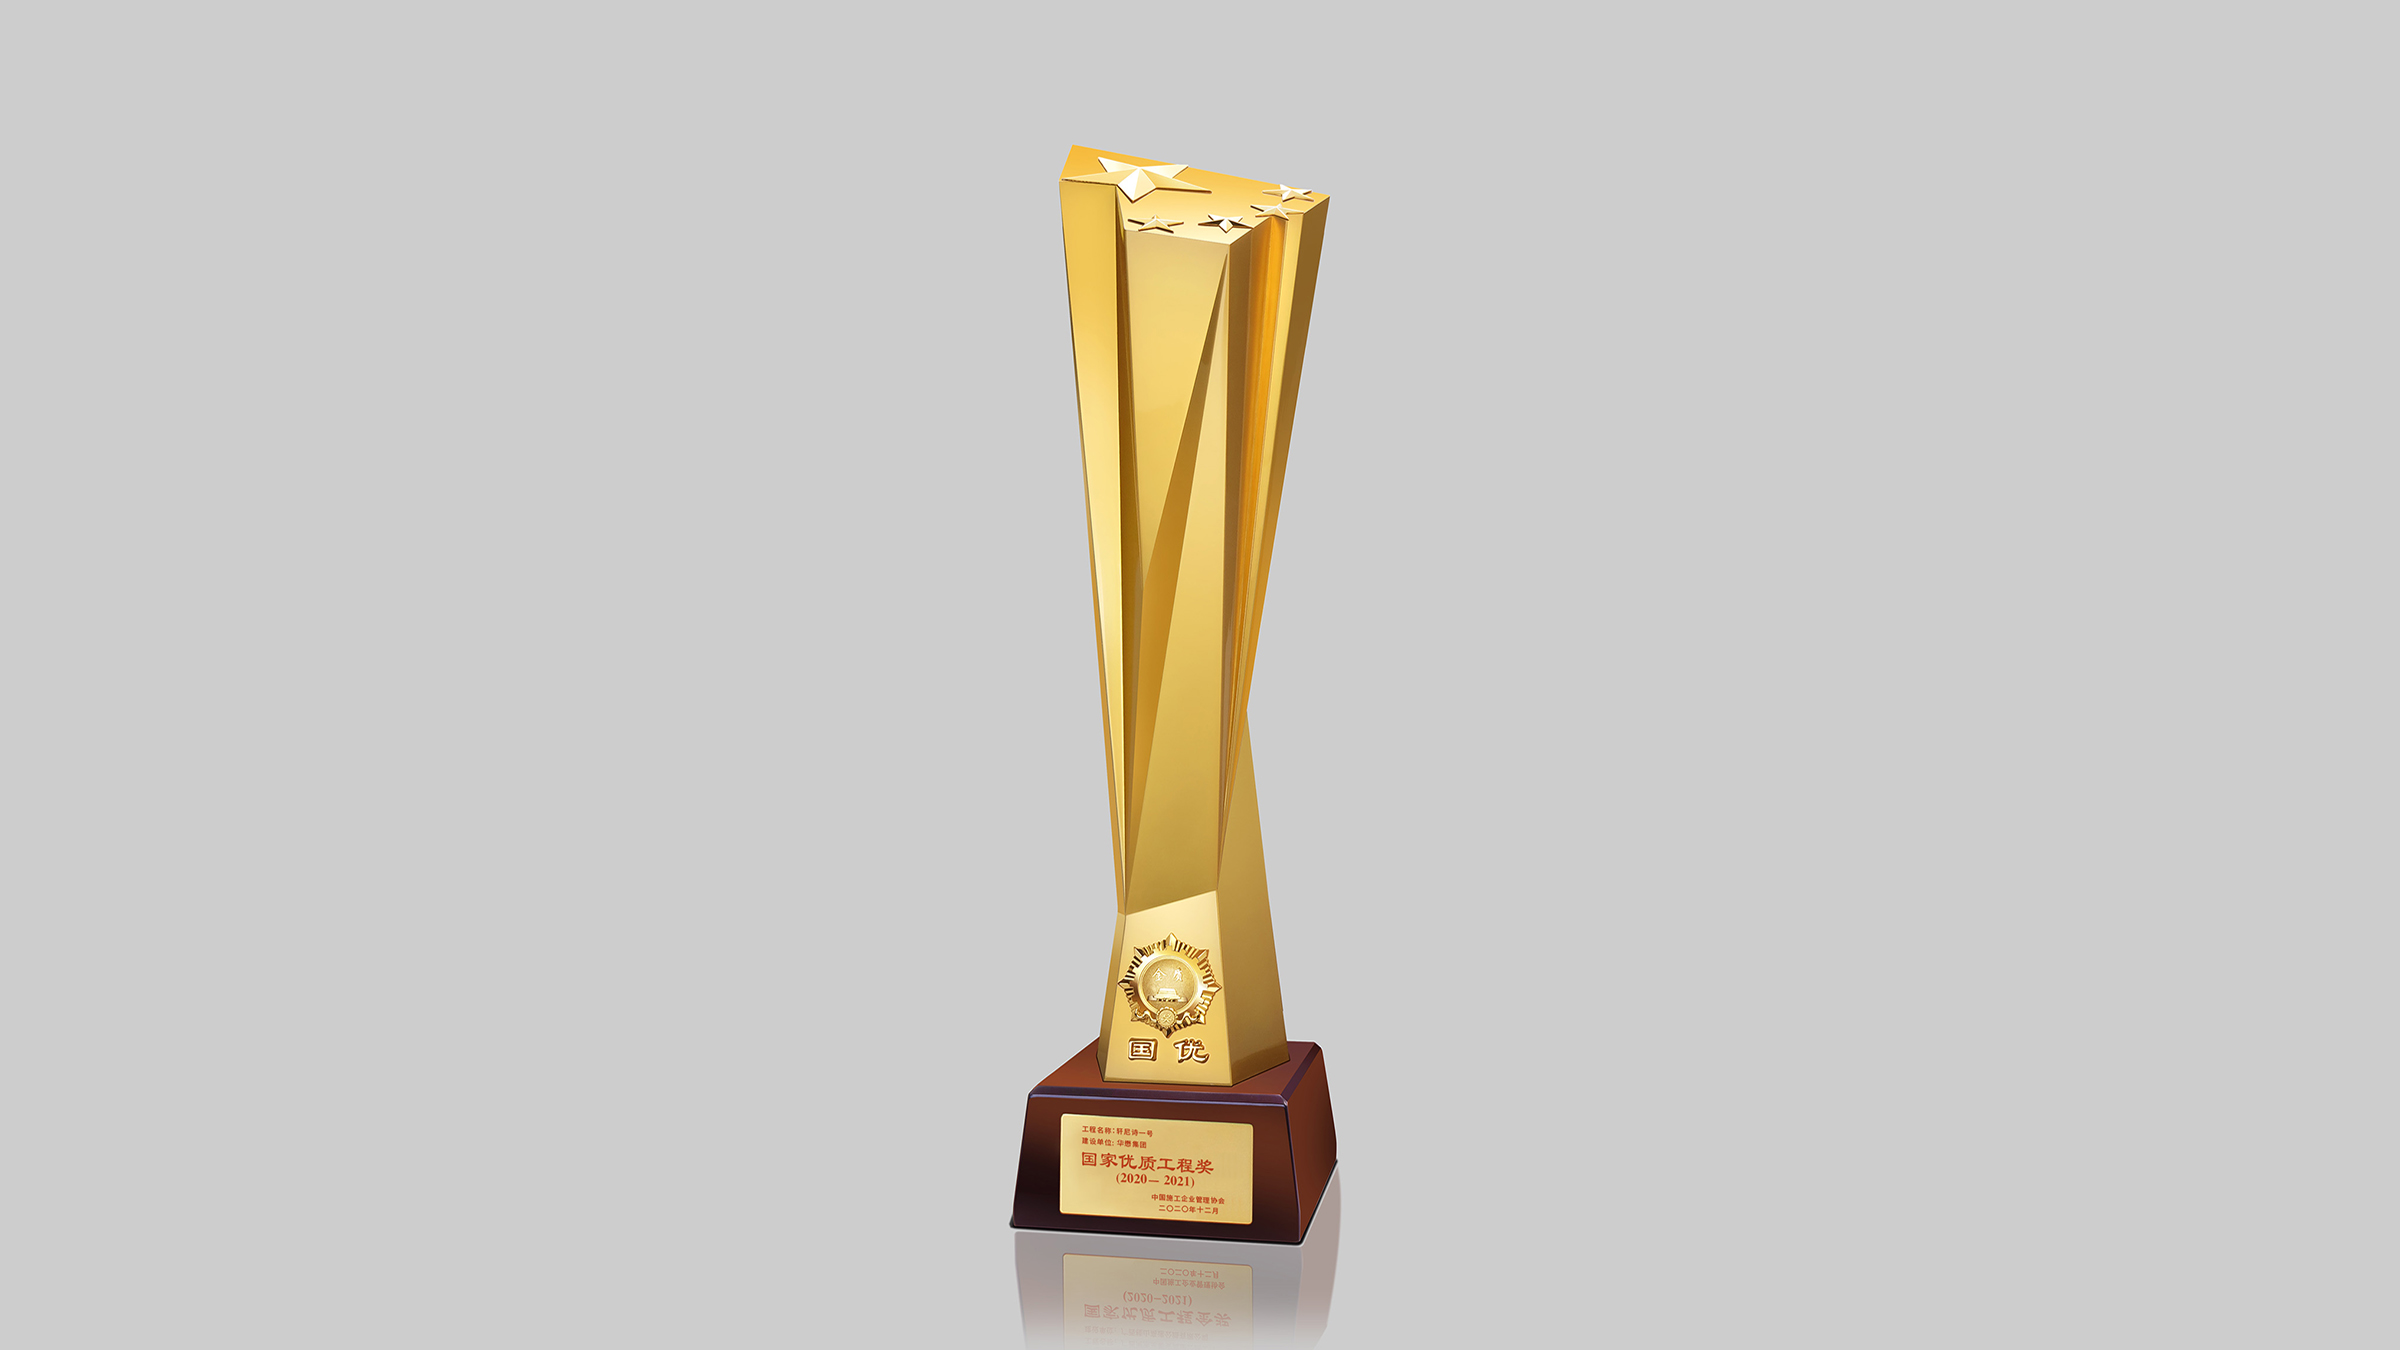 Chinachem Group - National Quality Engineering Award 2020  - One Hennessy